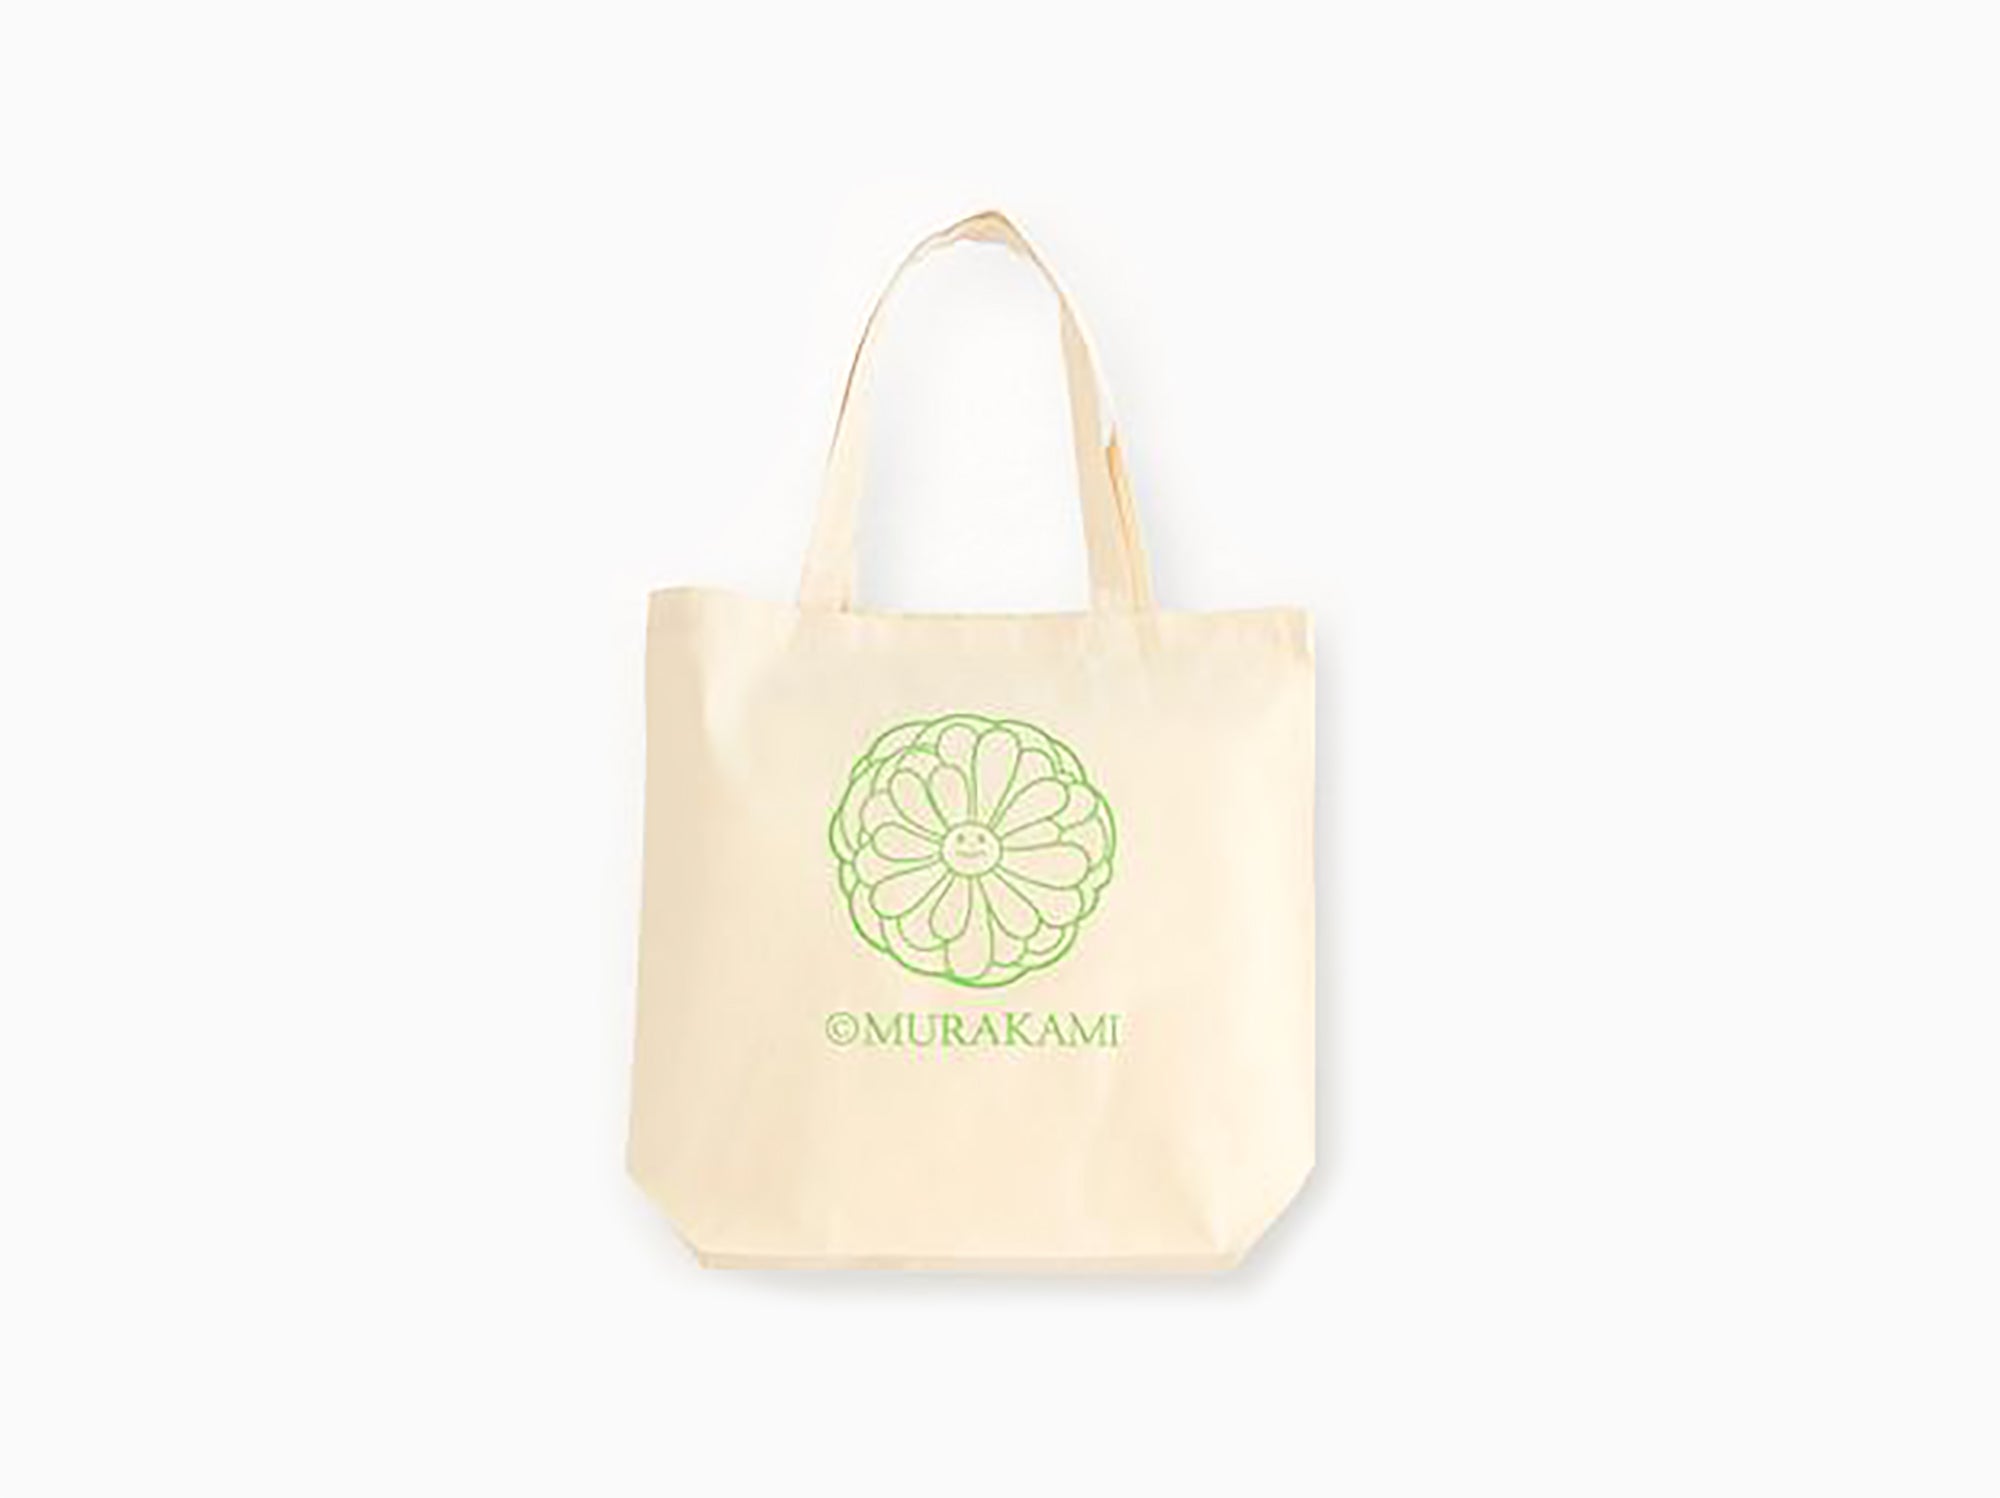 Takashi Murakami - Tote bag "Korin" green